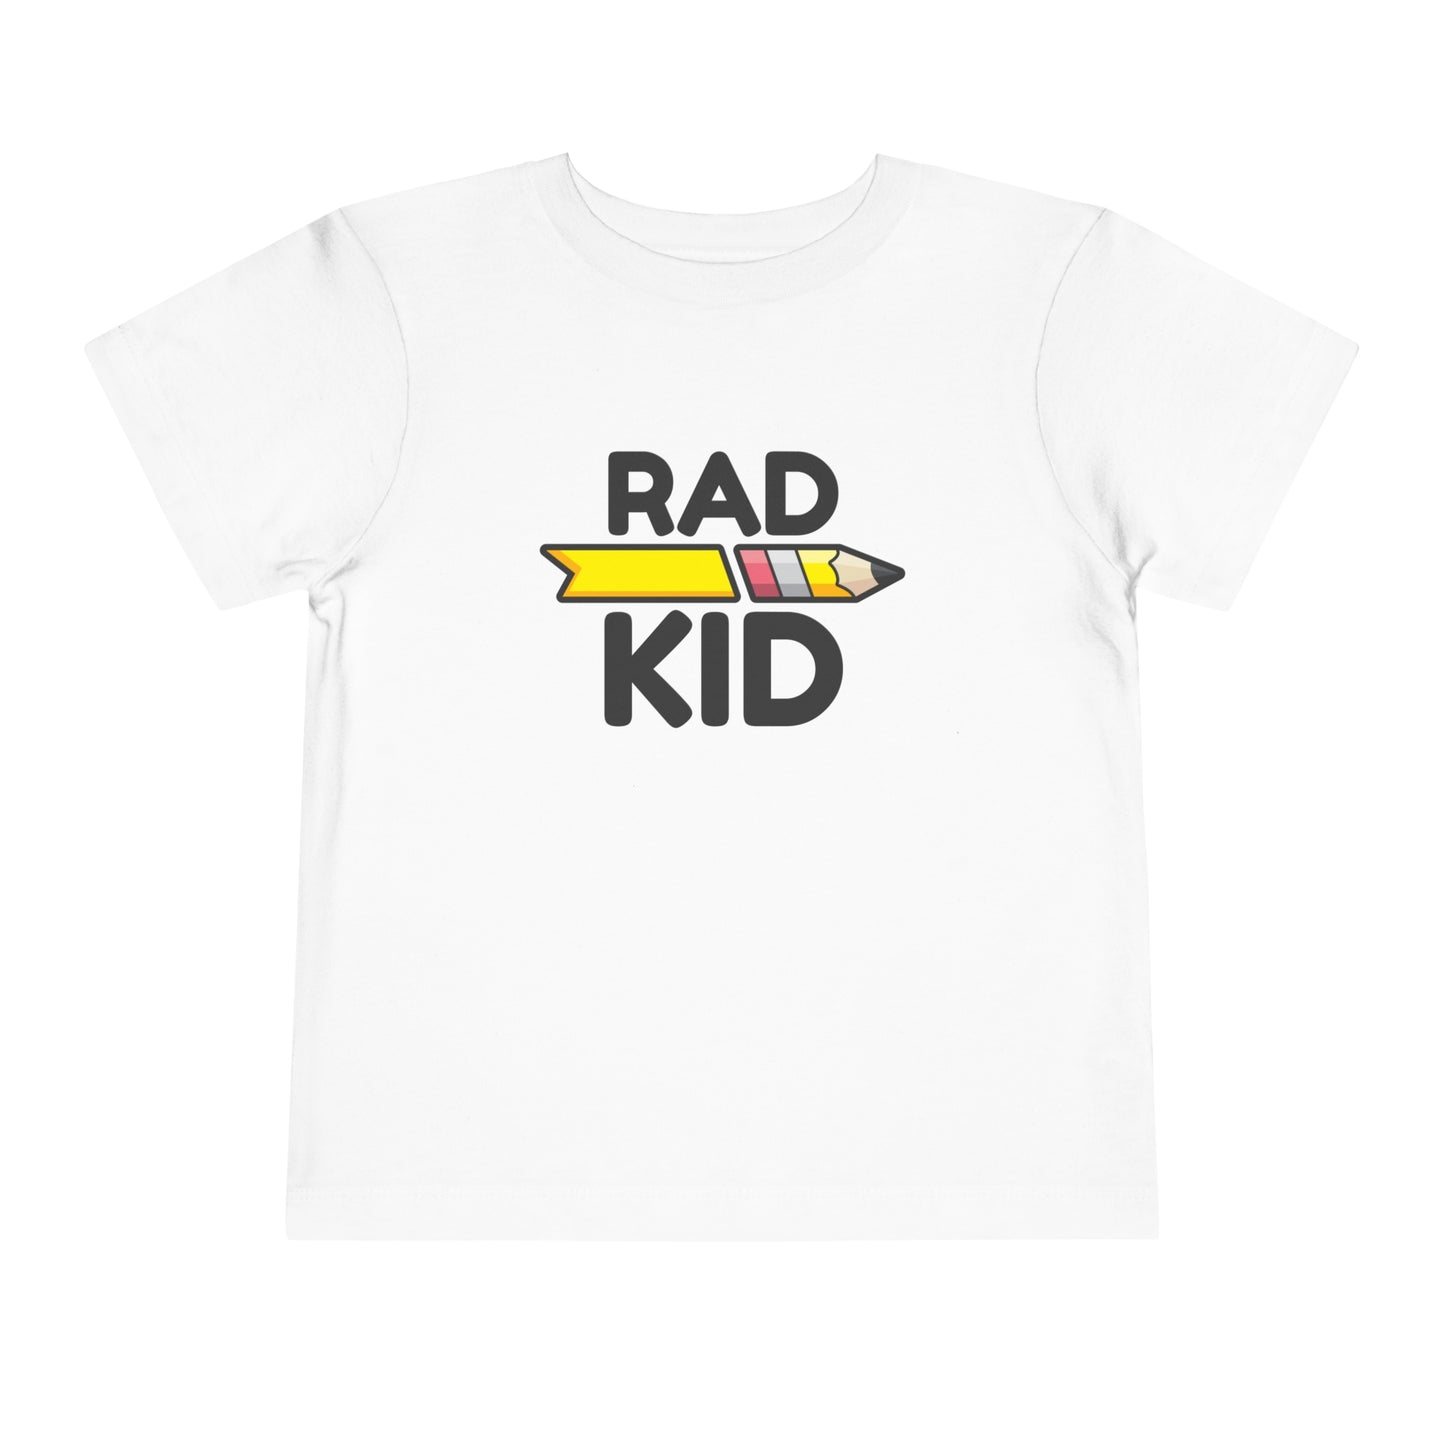 "RAD KID" SQUAD Toddler Short Sleeve Tee Shirt